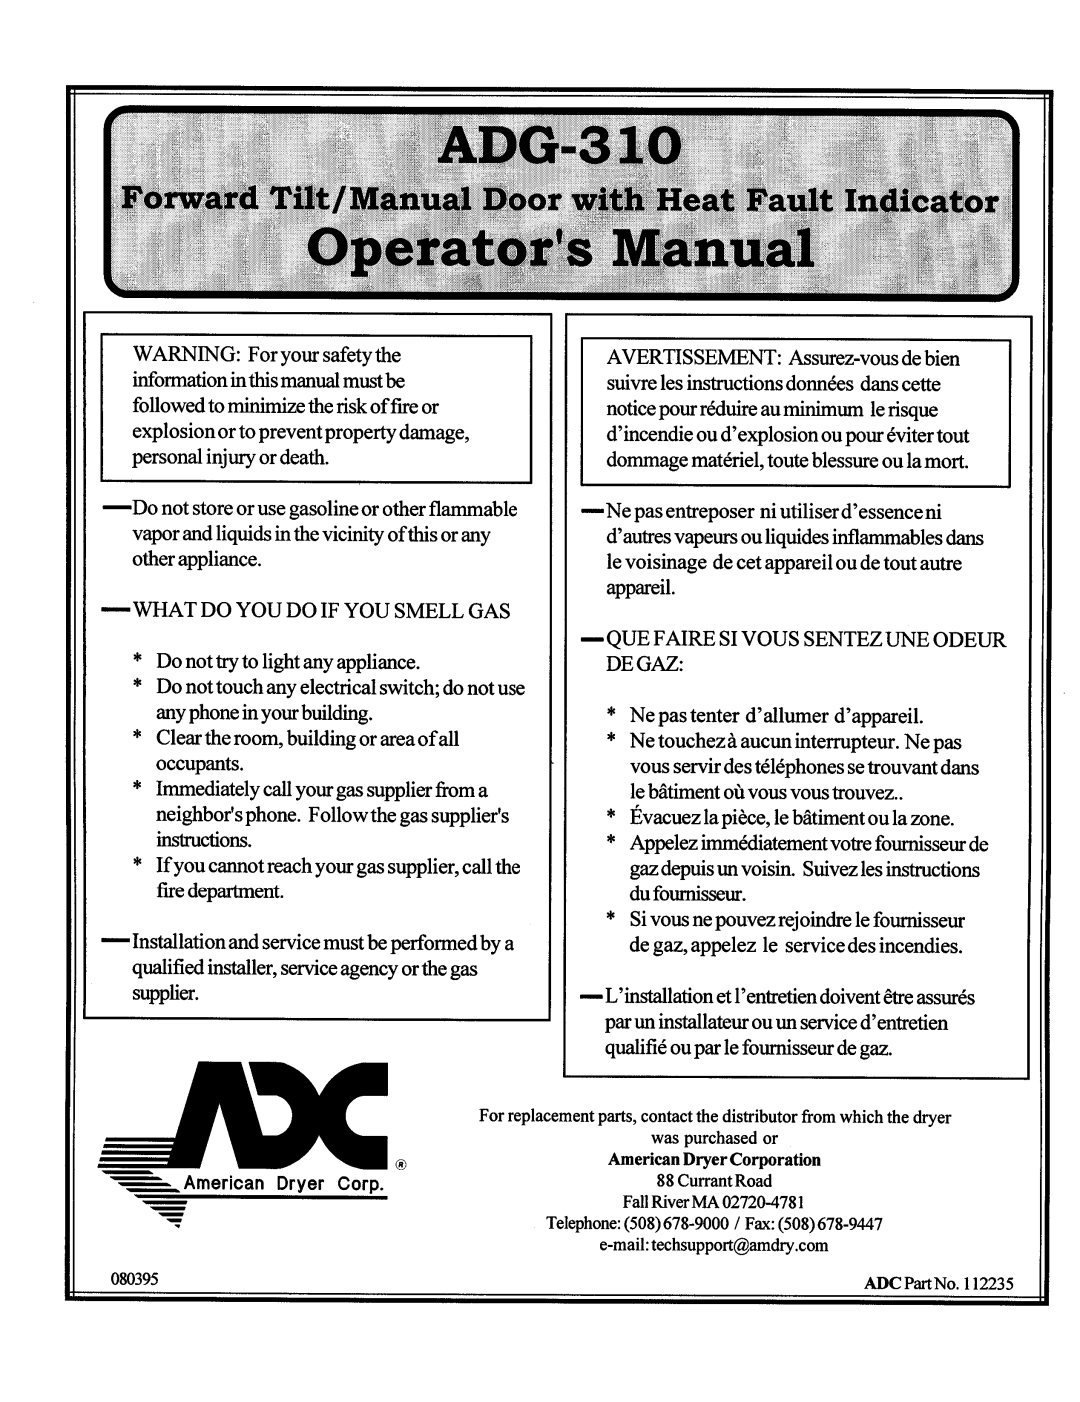 American Dryer Corp ADG-310 manual 